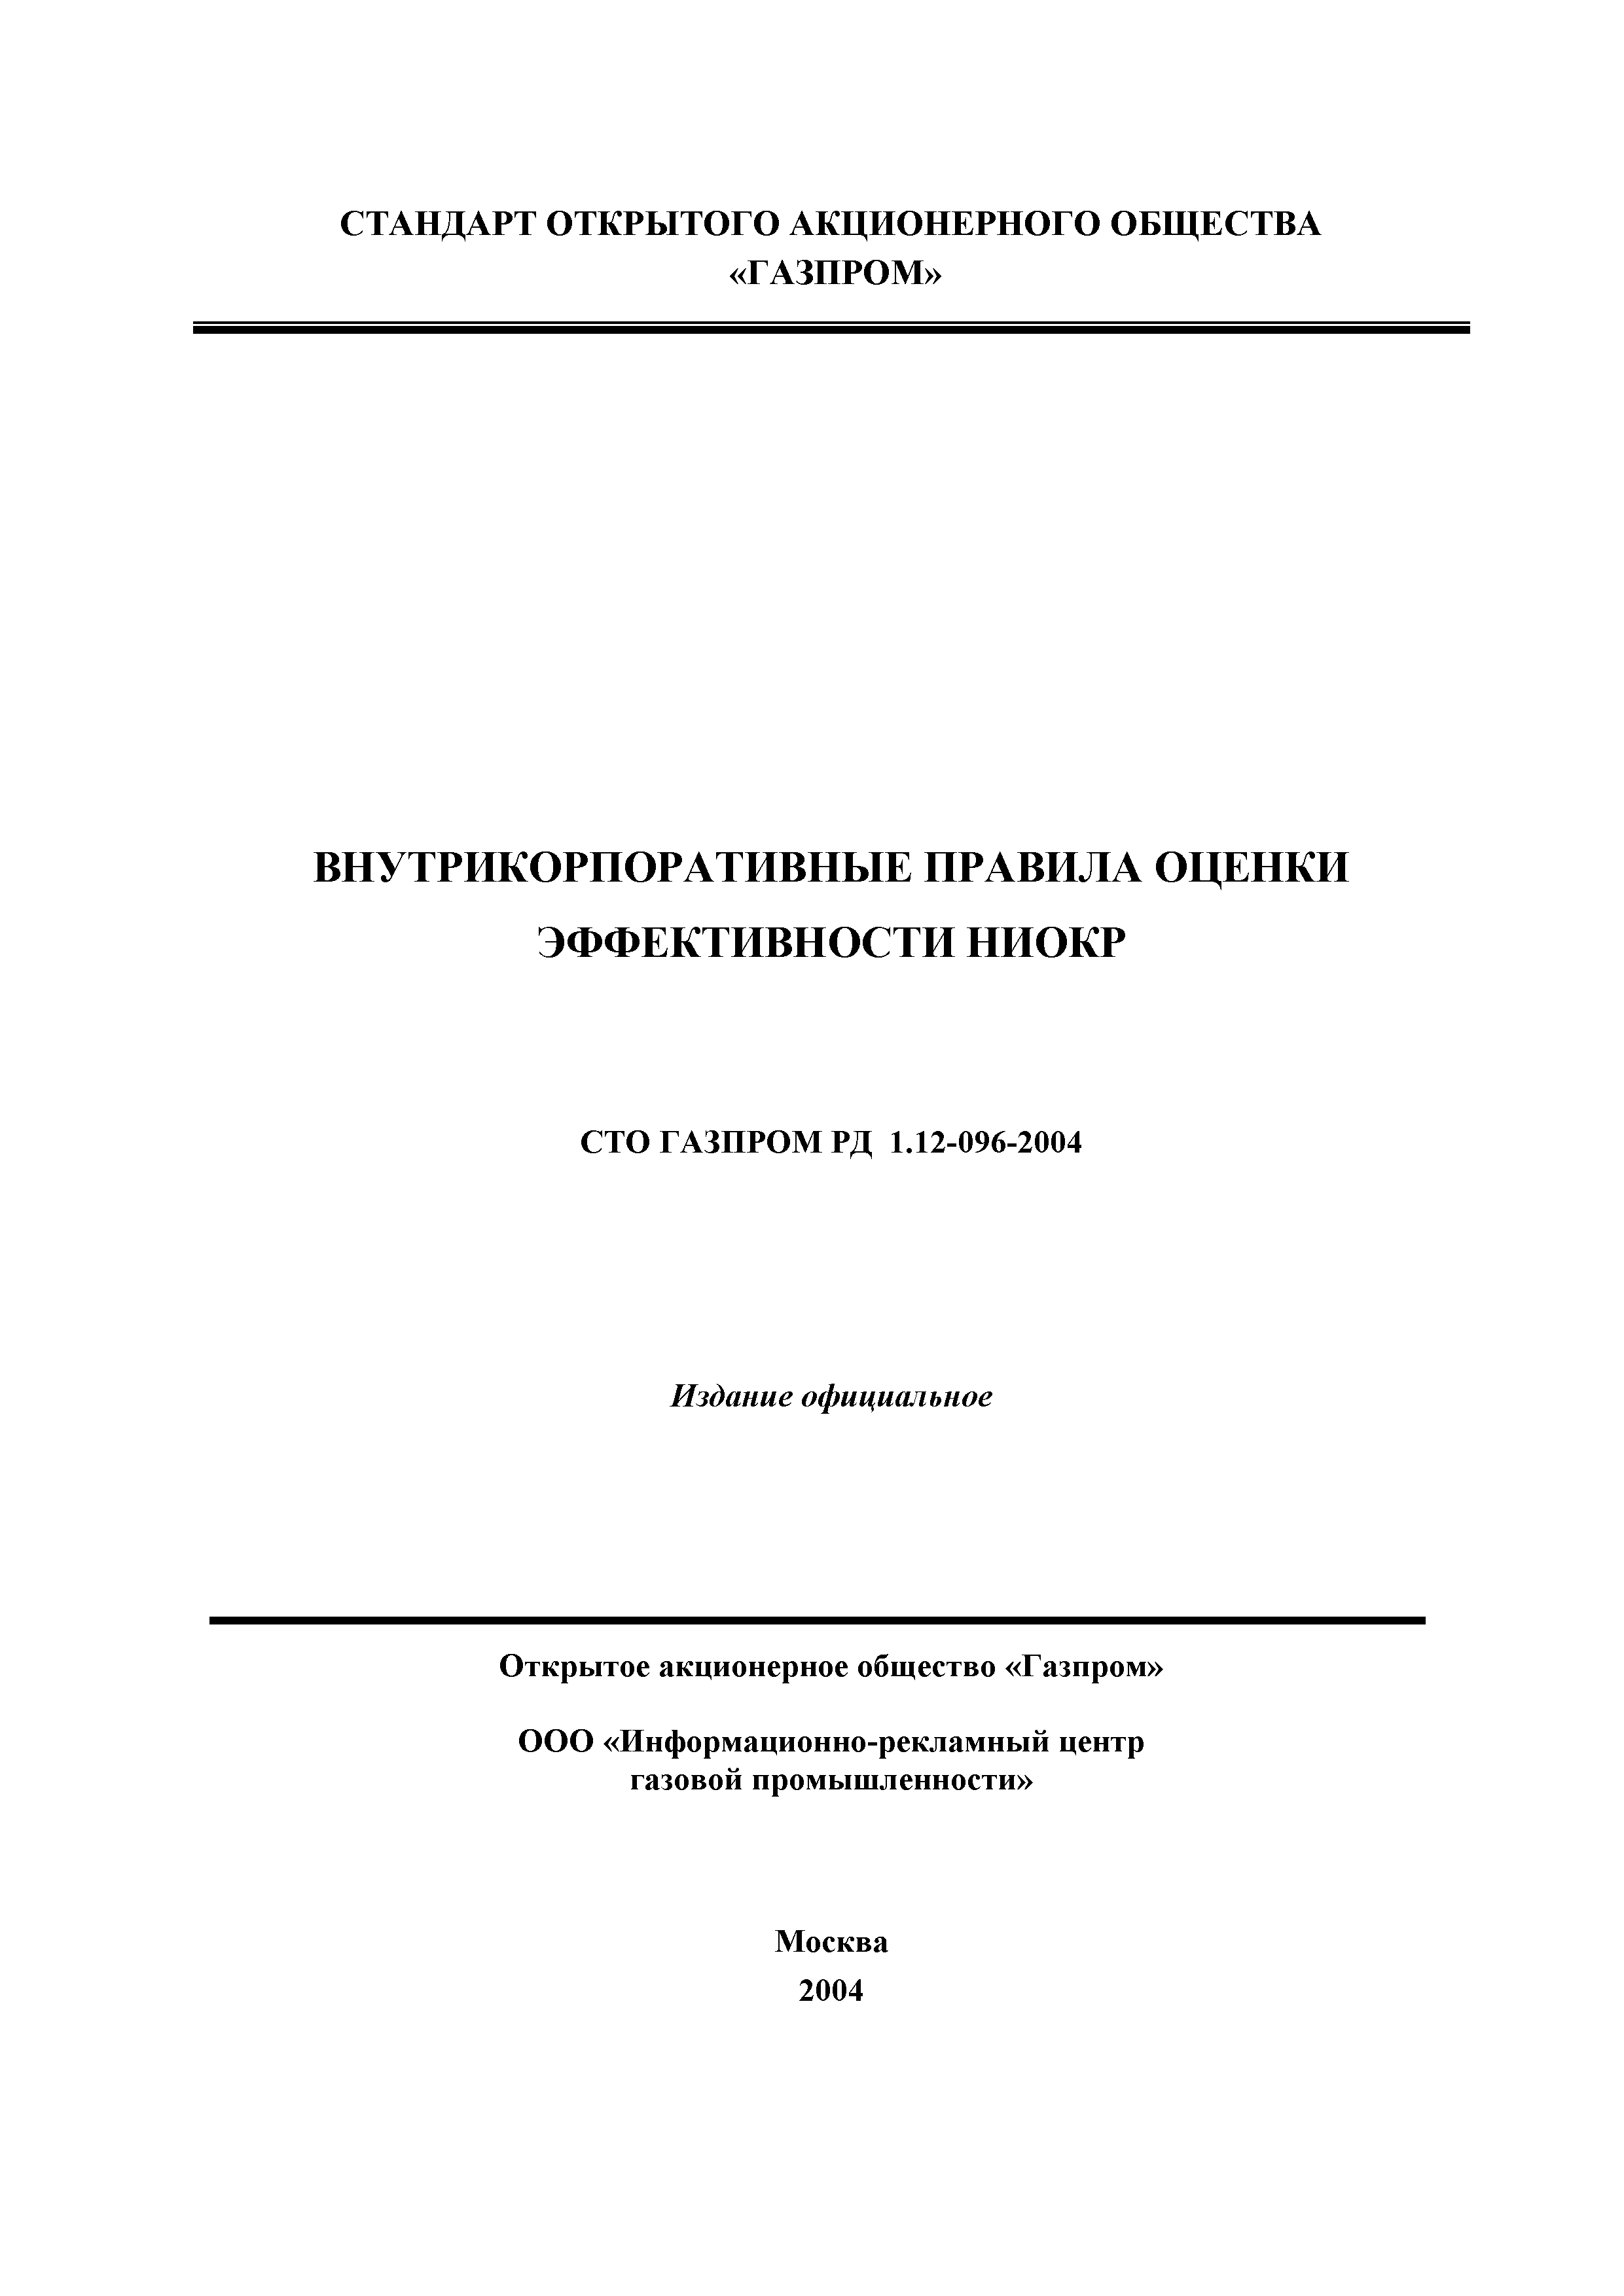 СТО Газпром РД 1.12-096-2004